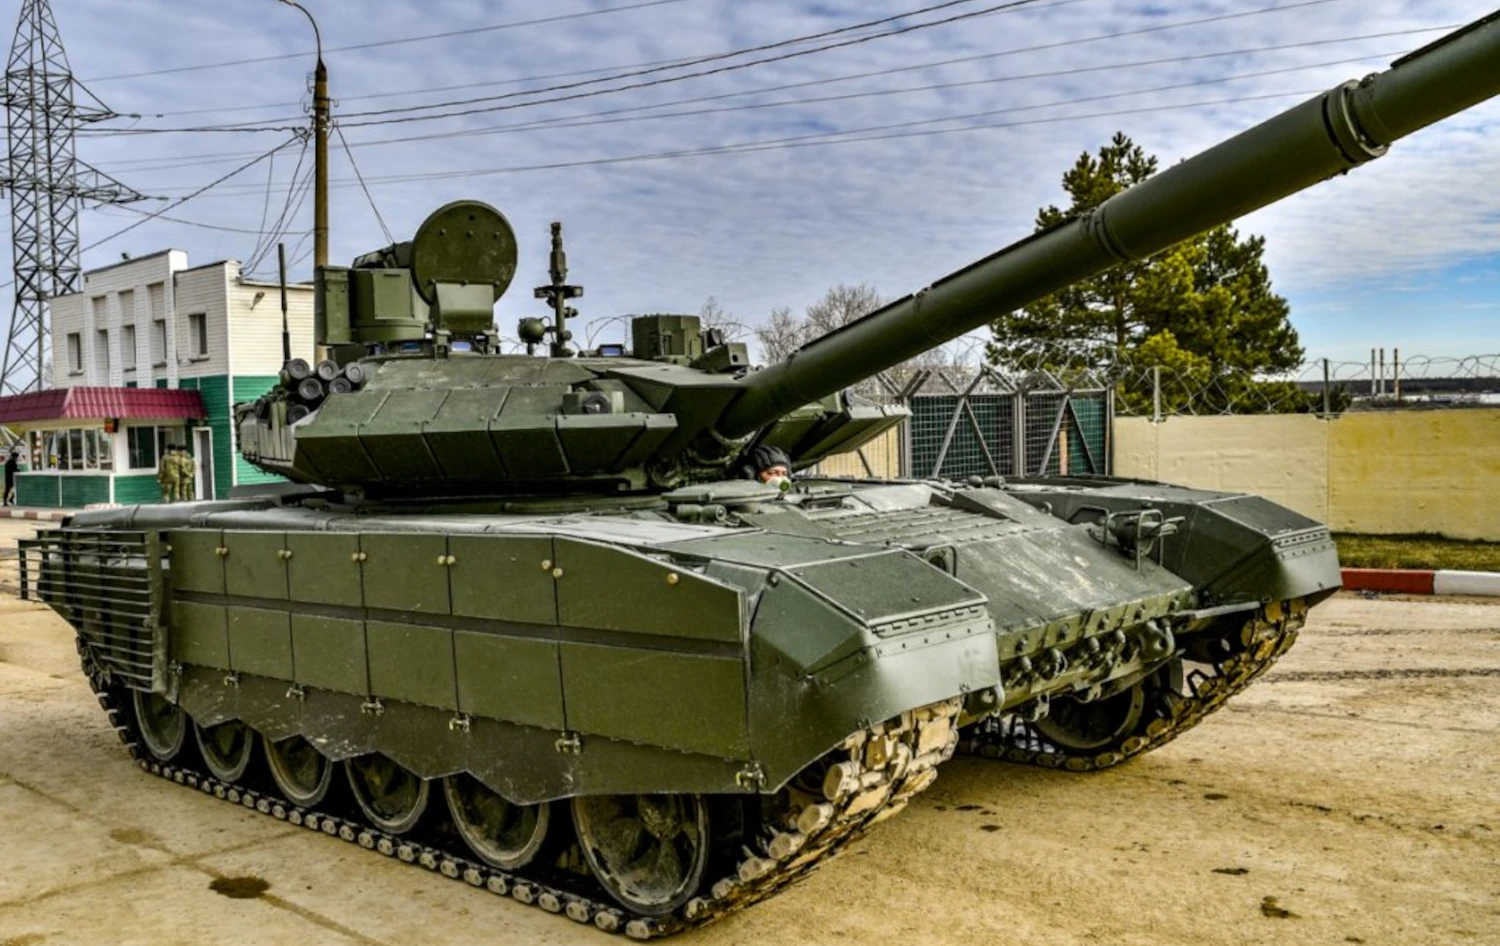 T-90M Proryv-3 Tank